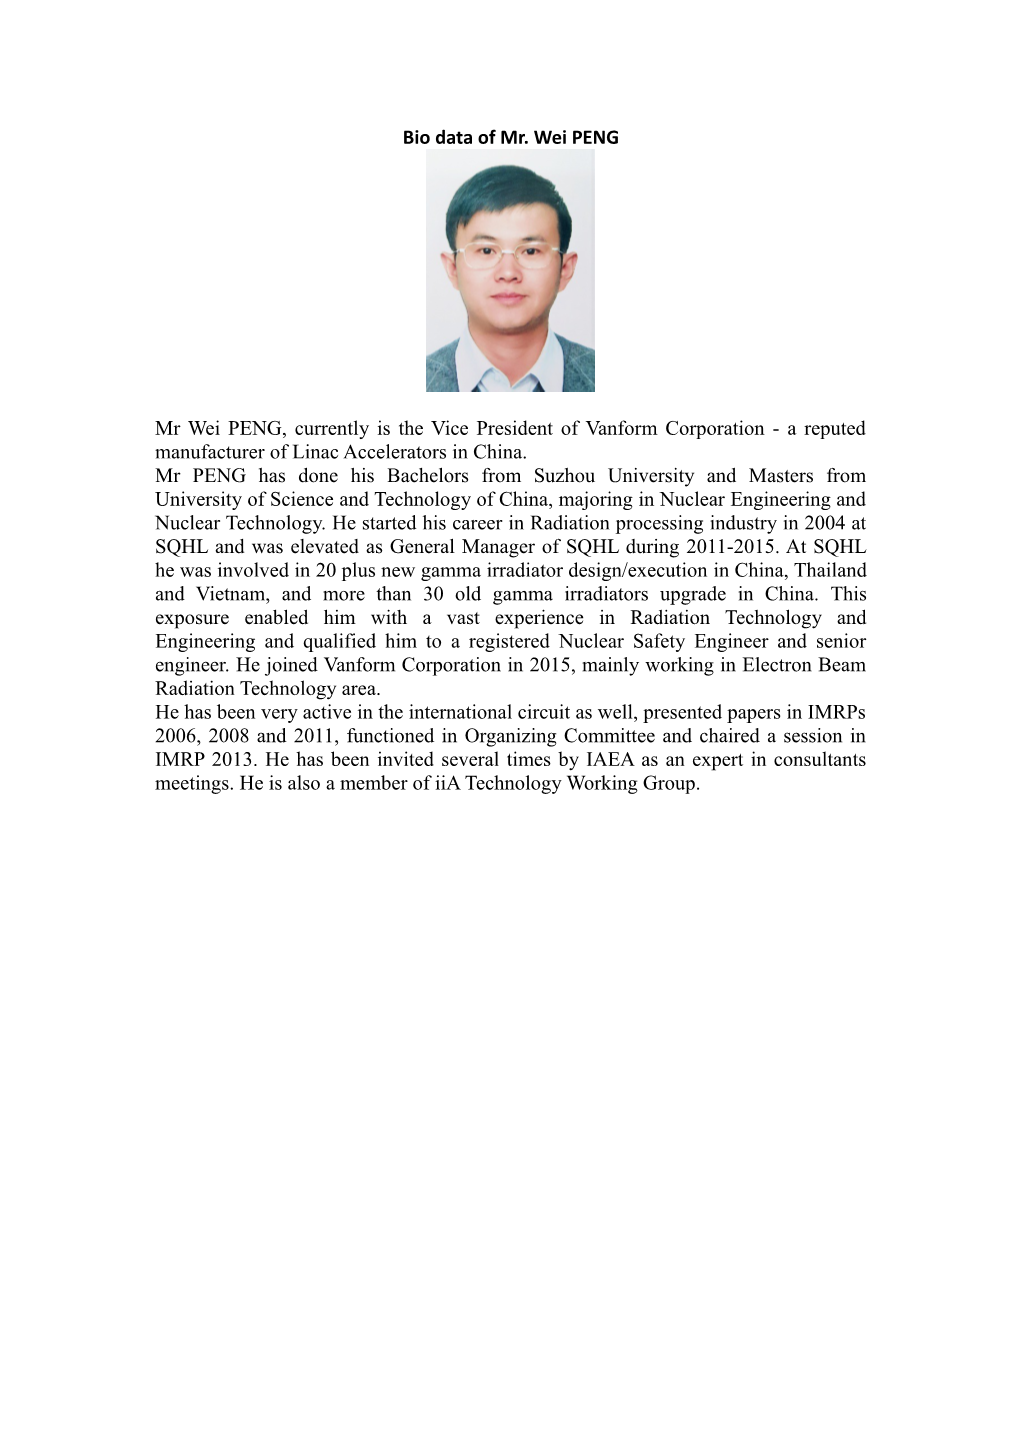 Bio Data of Mr. Wei PENG